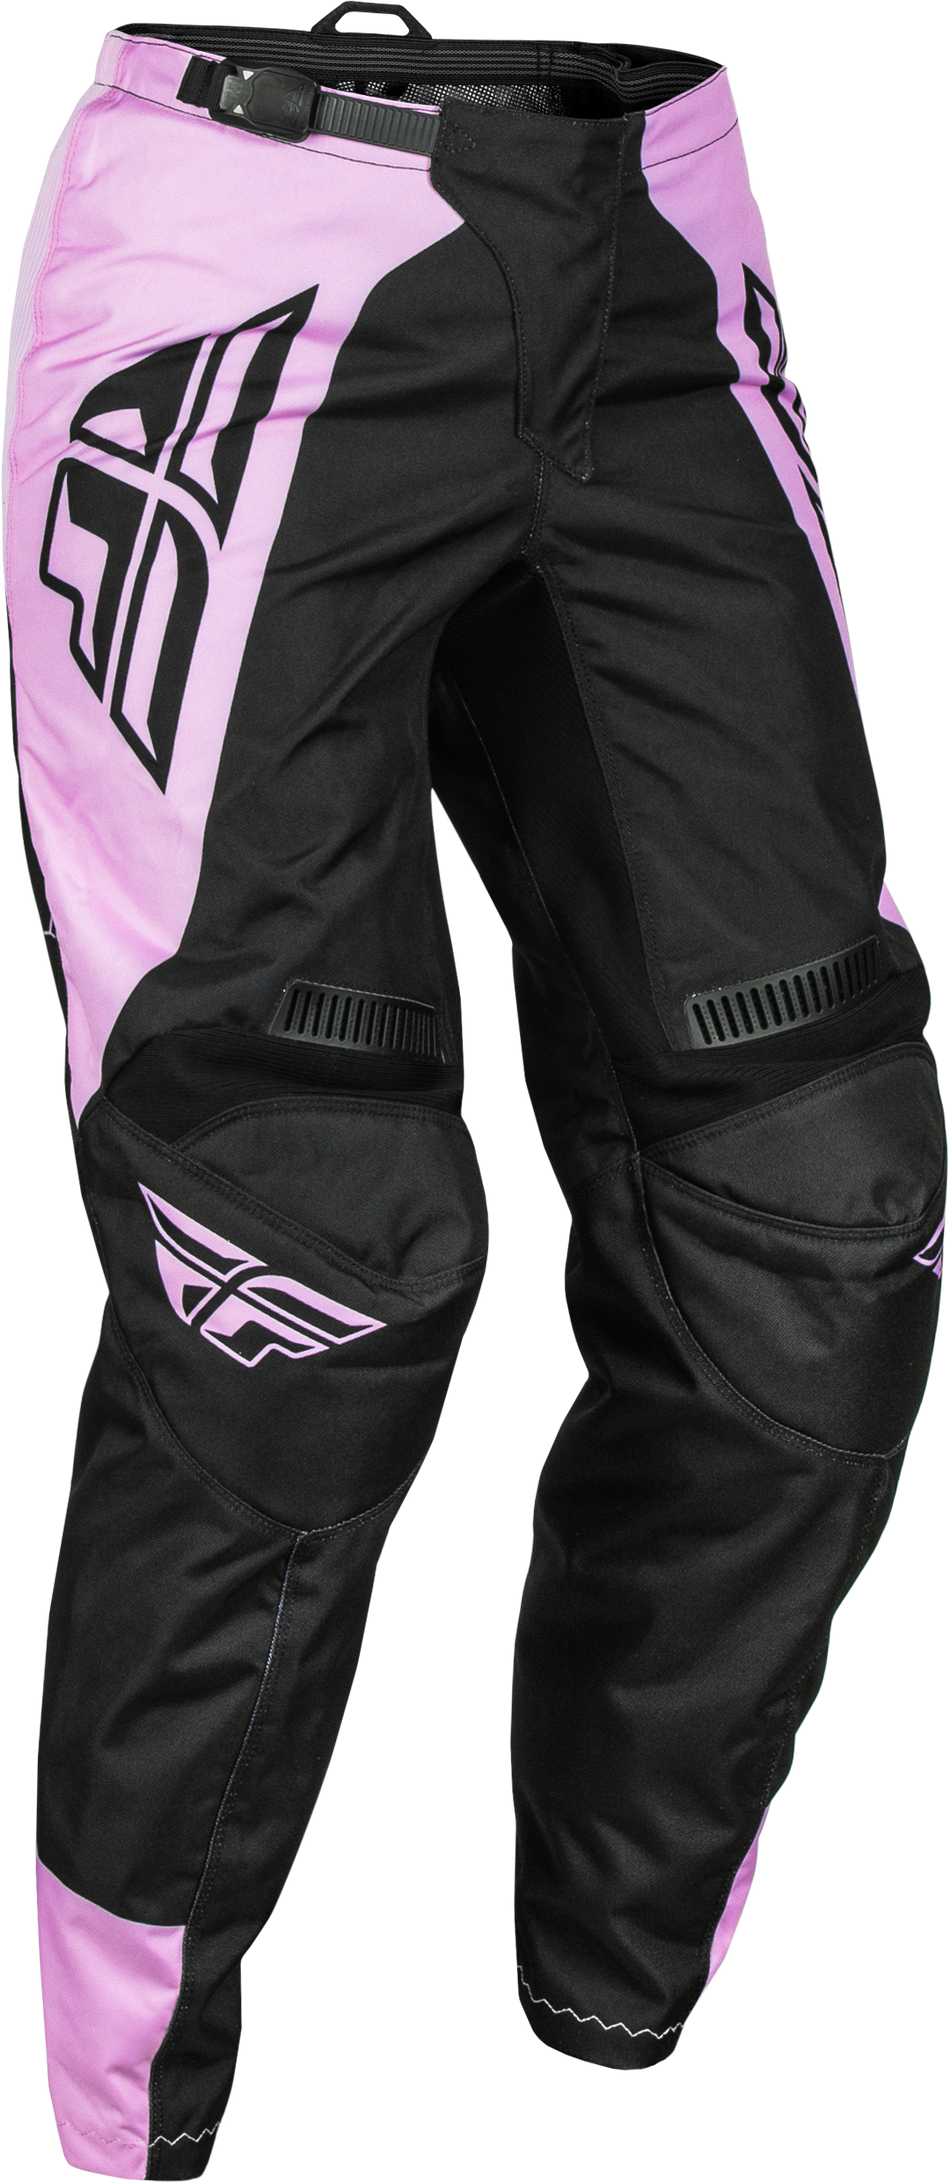 FLY RACING Women's F-16 Pants Black/Lavender Sz 11/12 377-83111